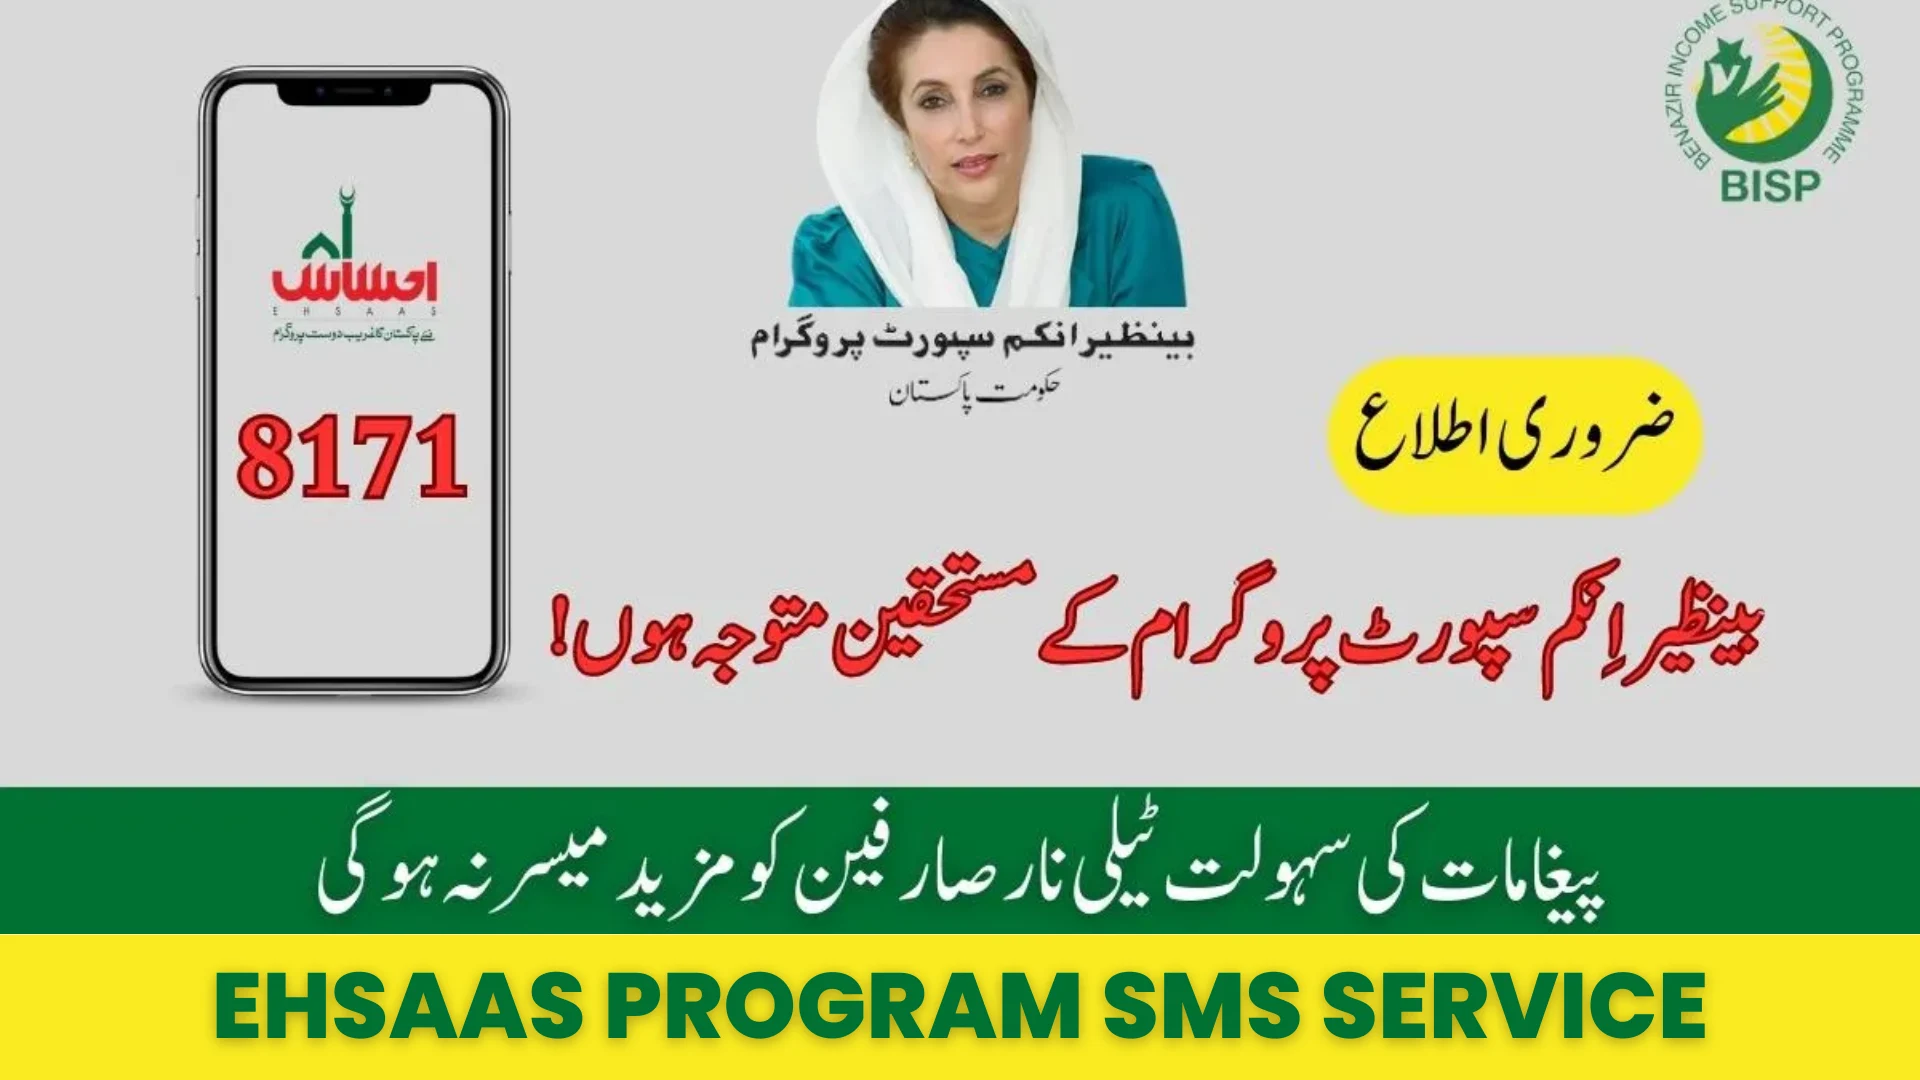 Ehsaas Program SMS Service